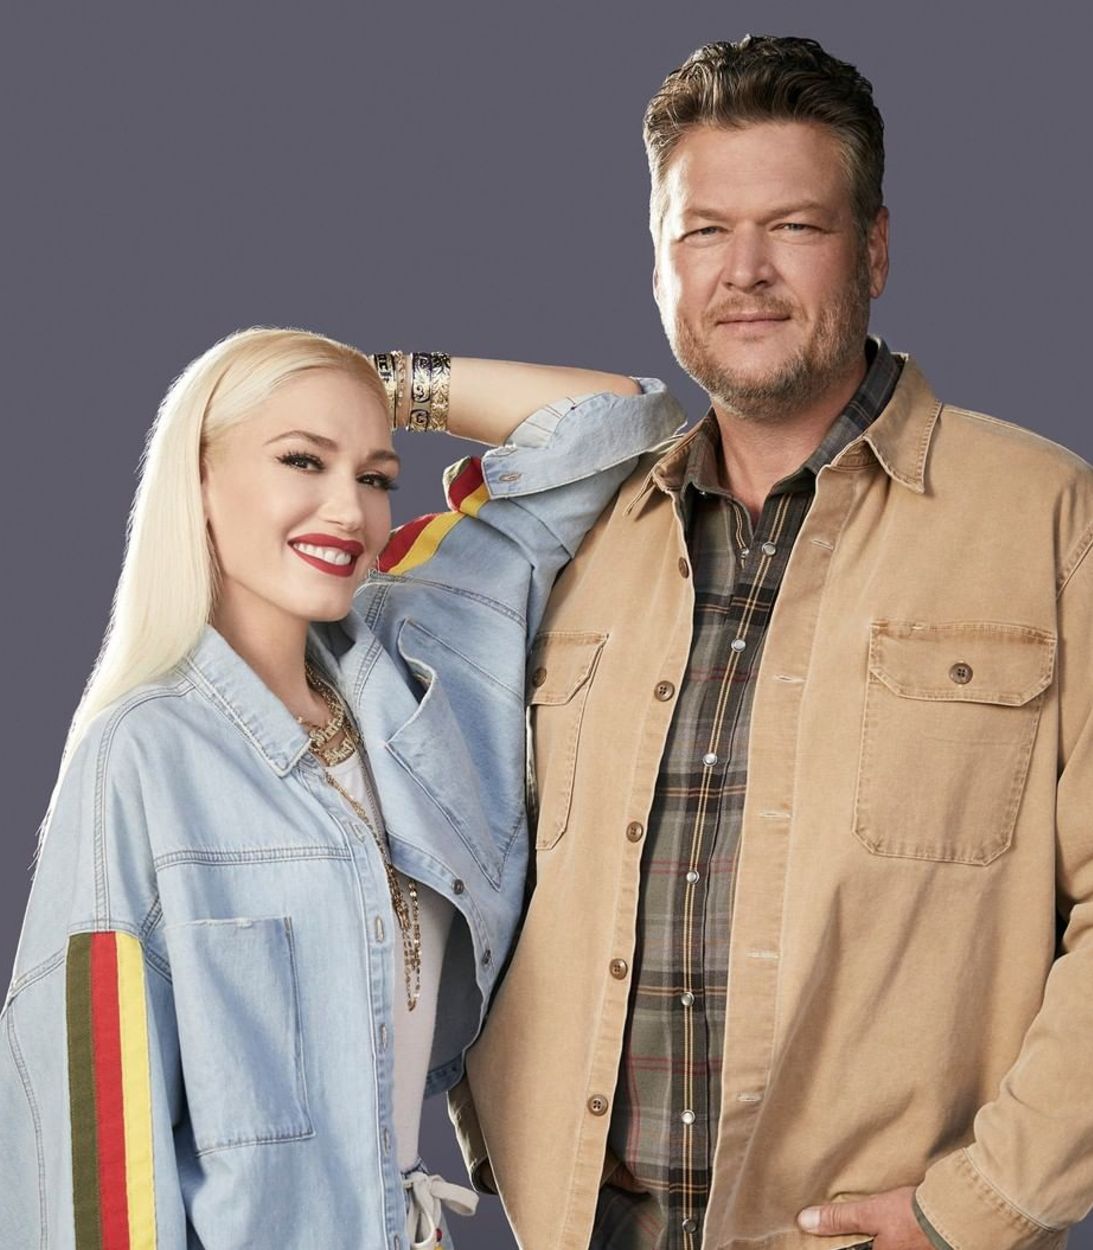 Gwen Stefani and Blake Shelton on The Voice season 19 promo vertical